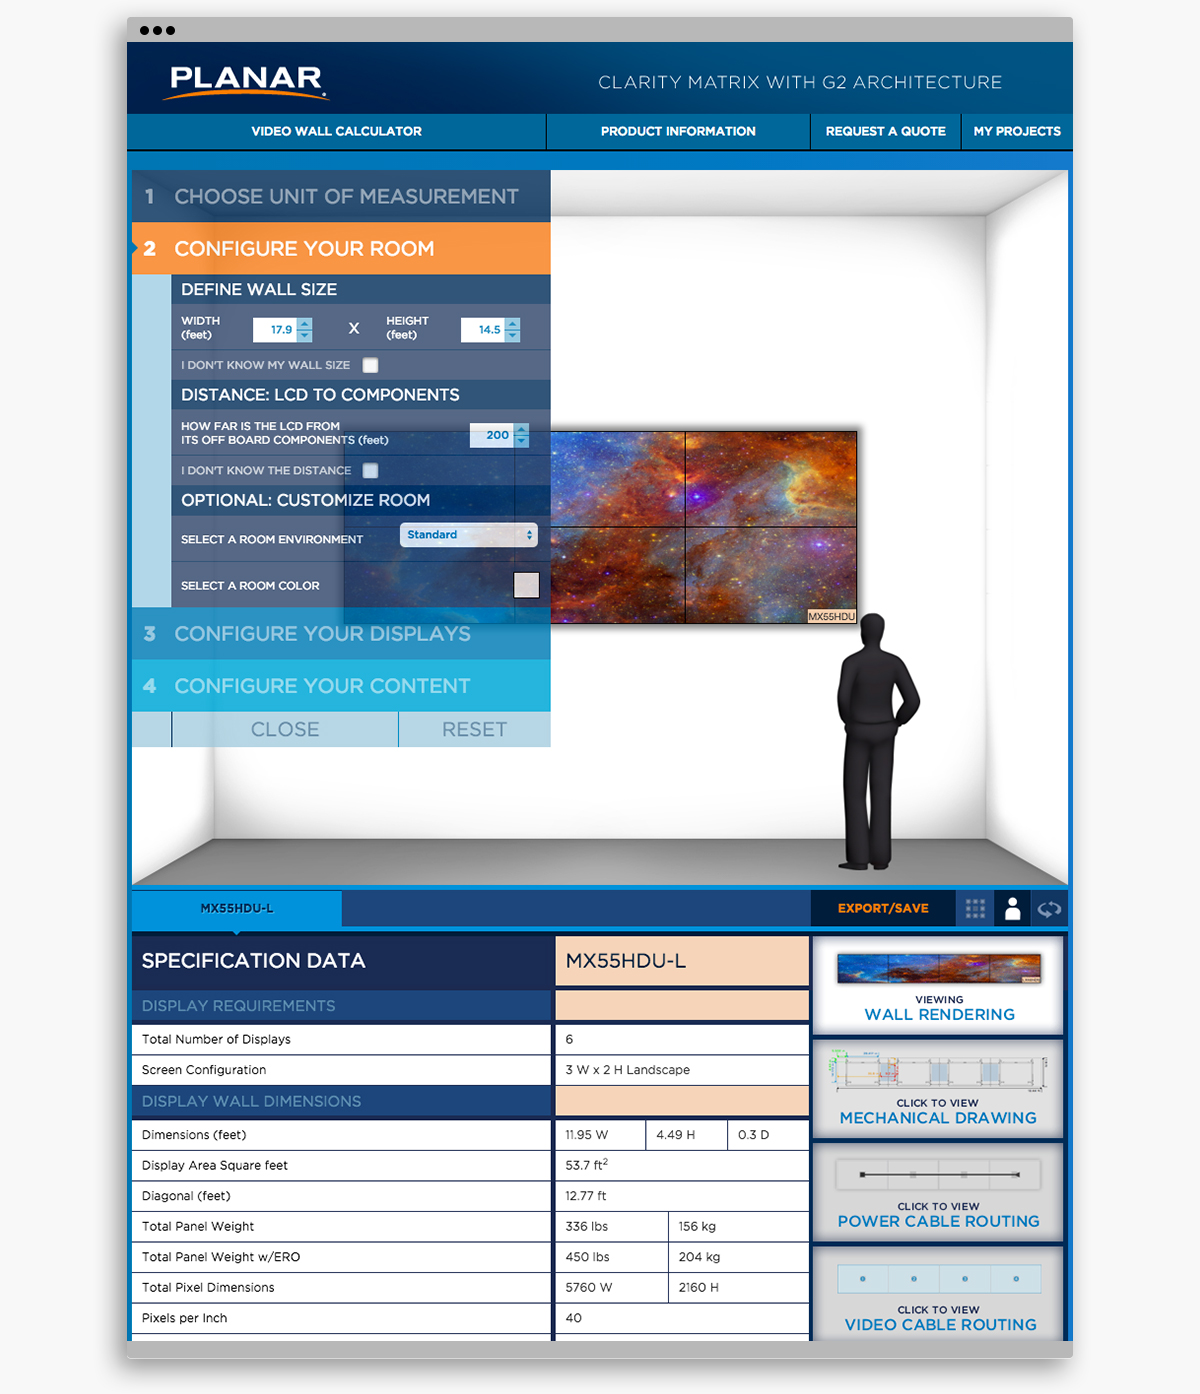 Planar Matrix website screenshot